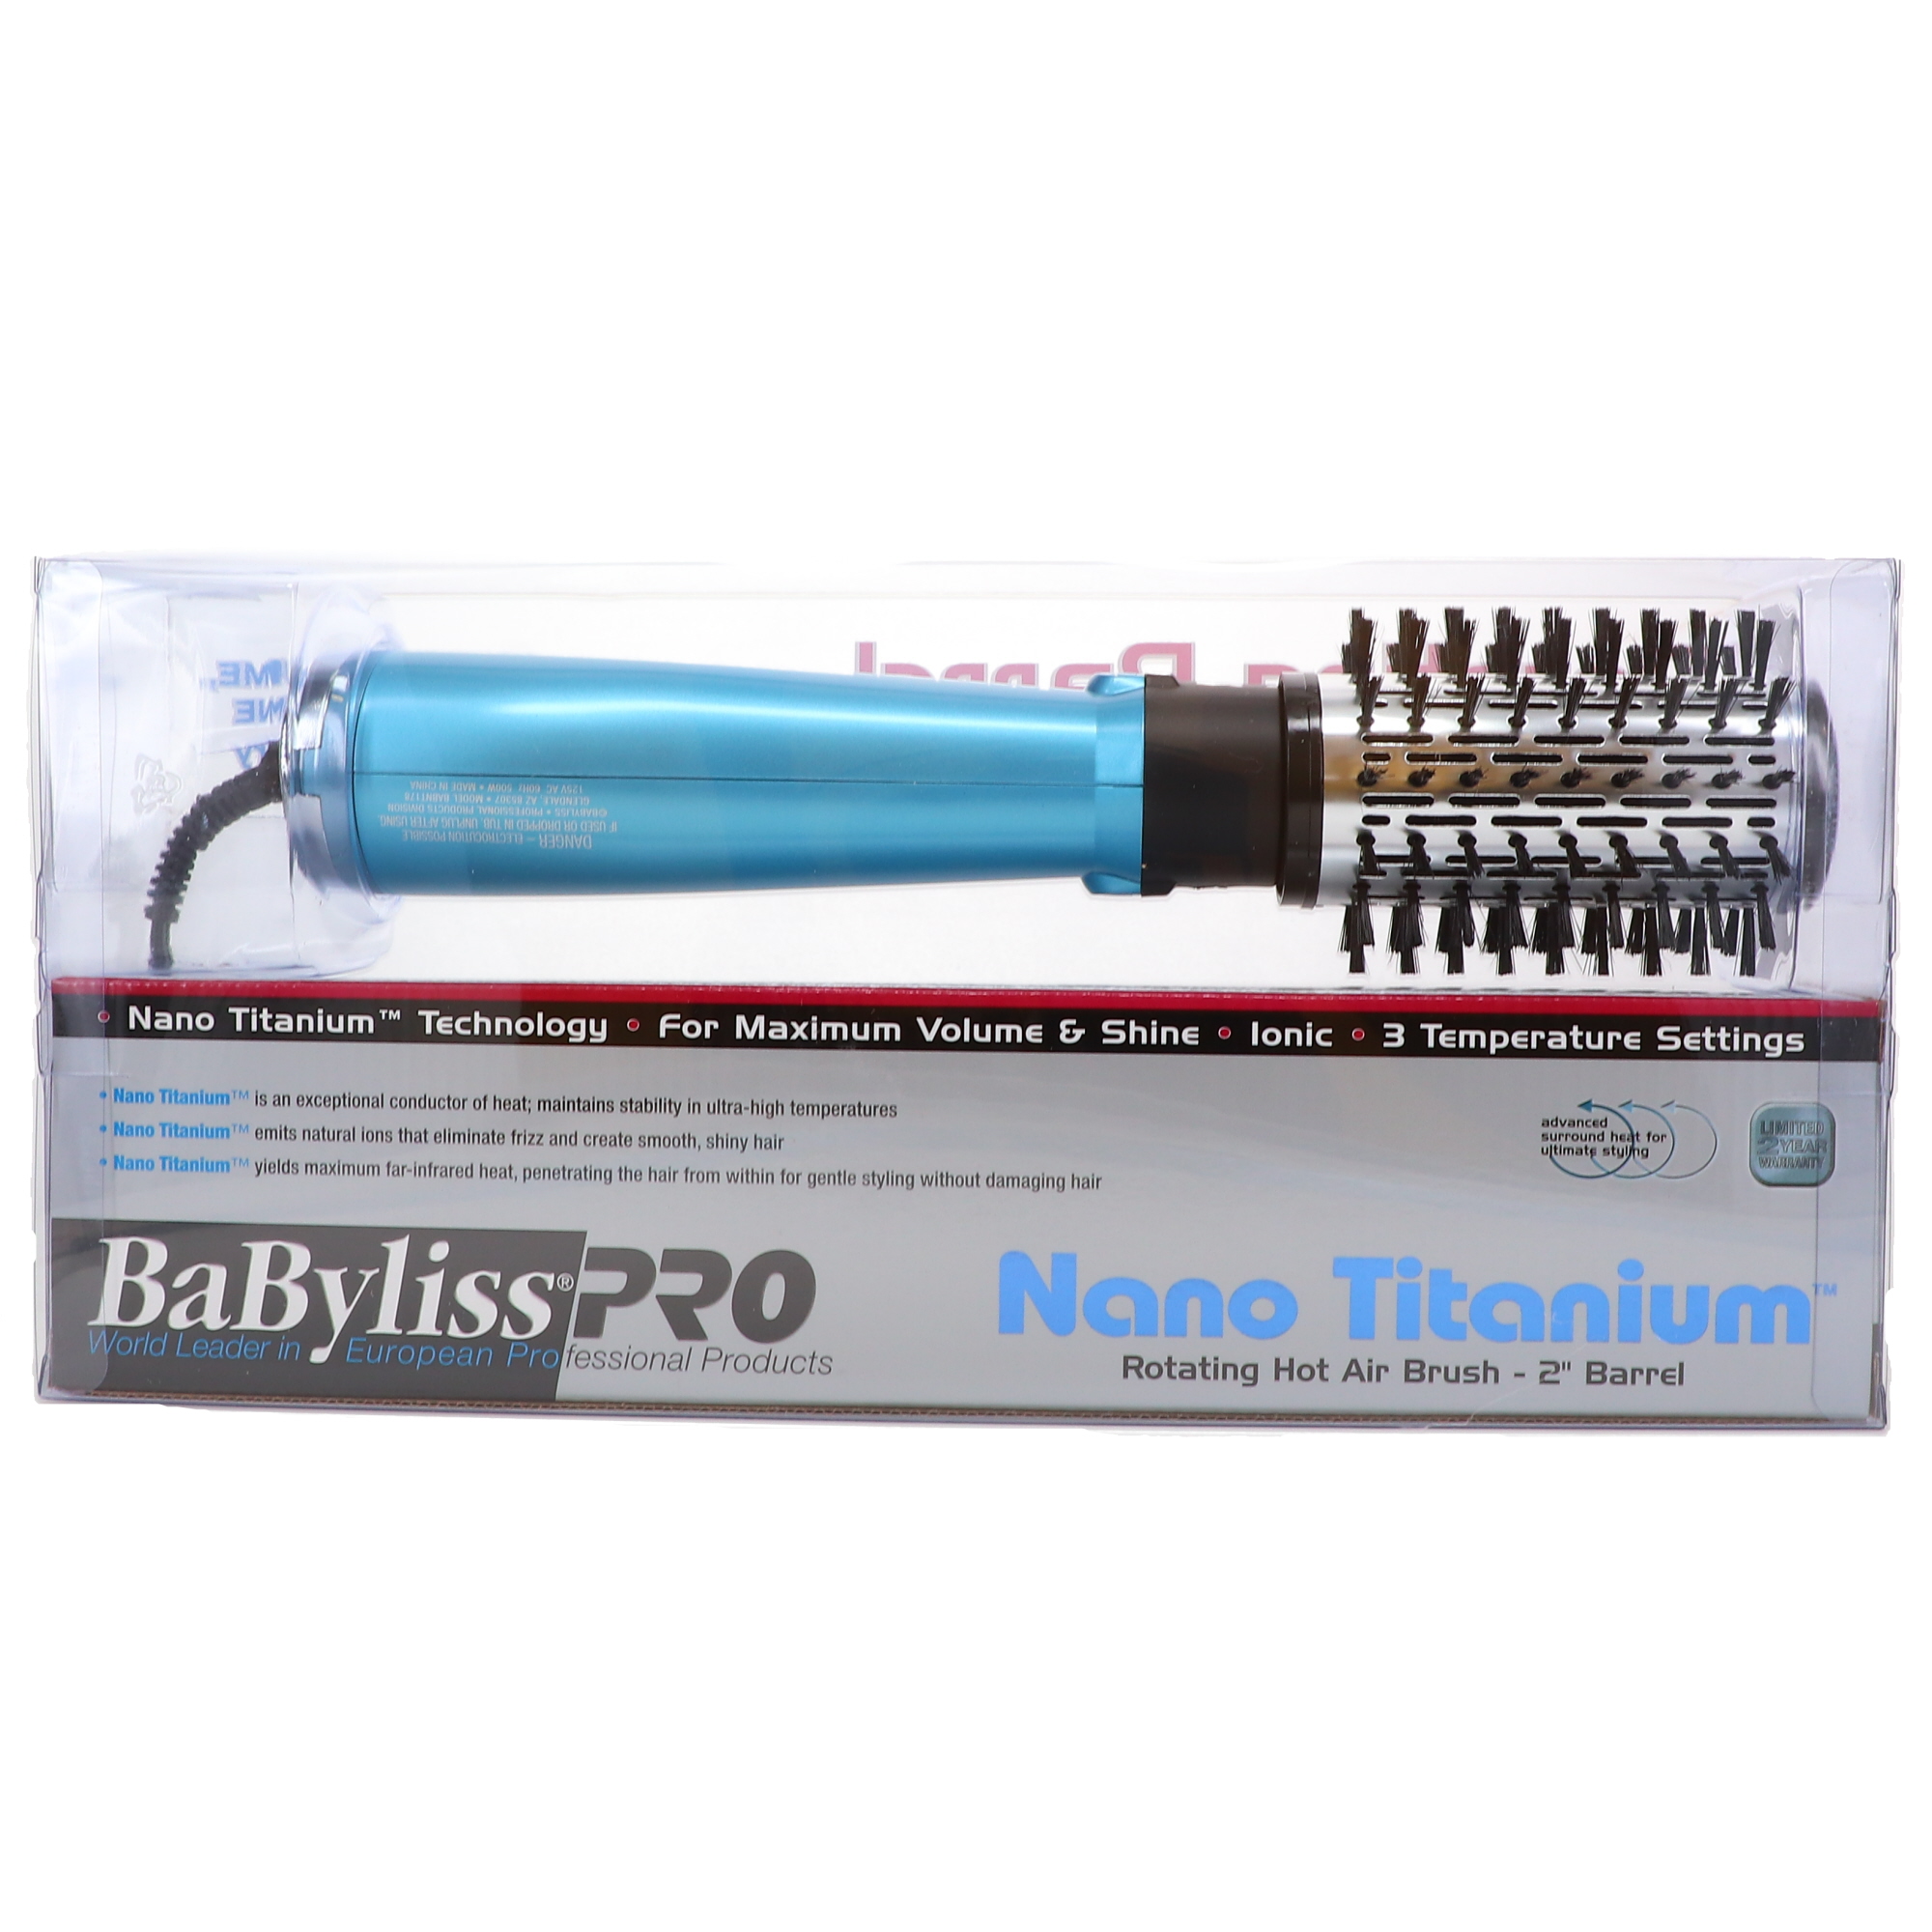 BaBylissPRO Nano Titanium 2 Rotating Hot Air Brush - image 5 of 8